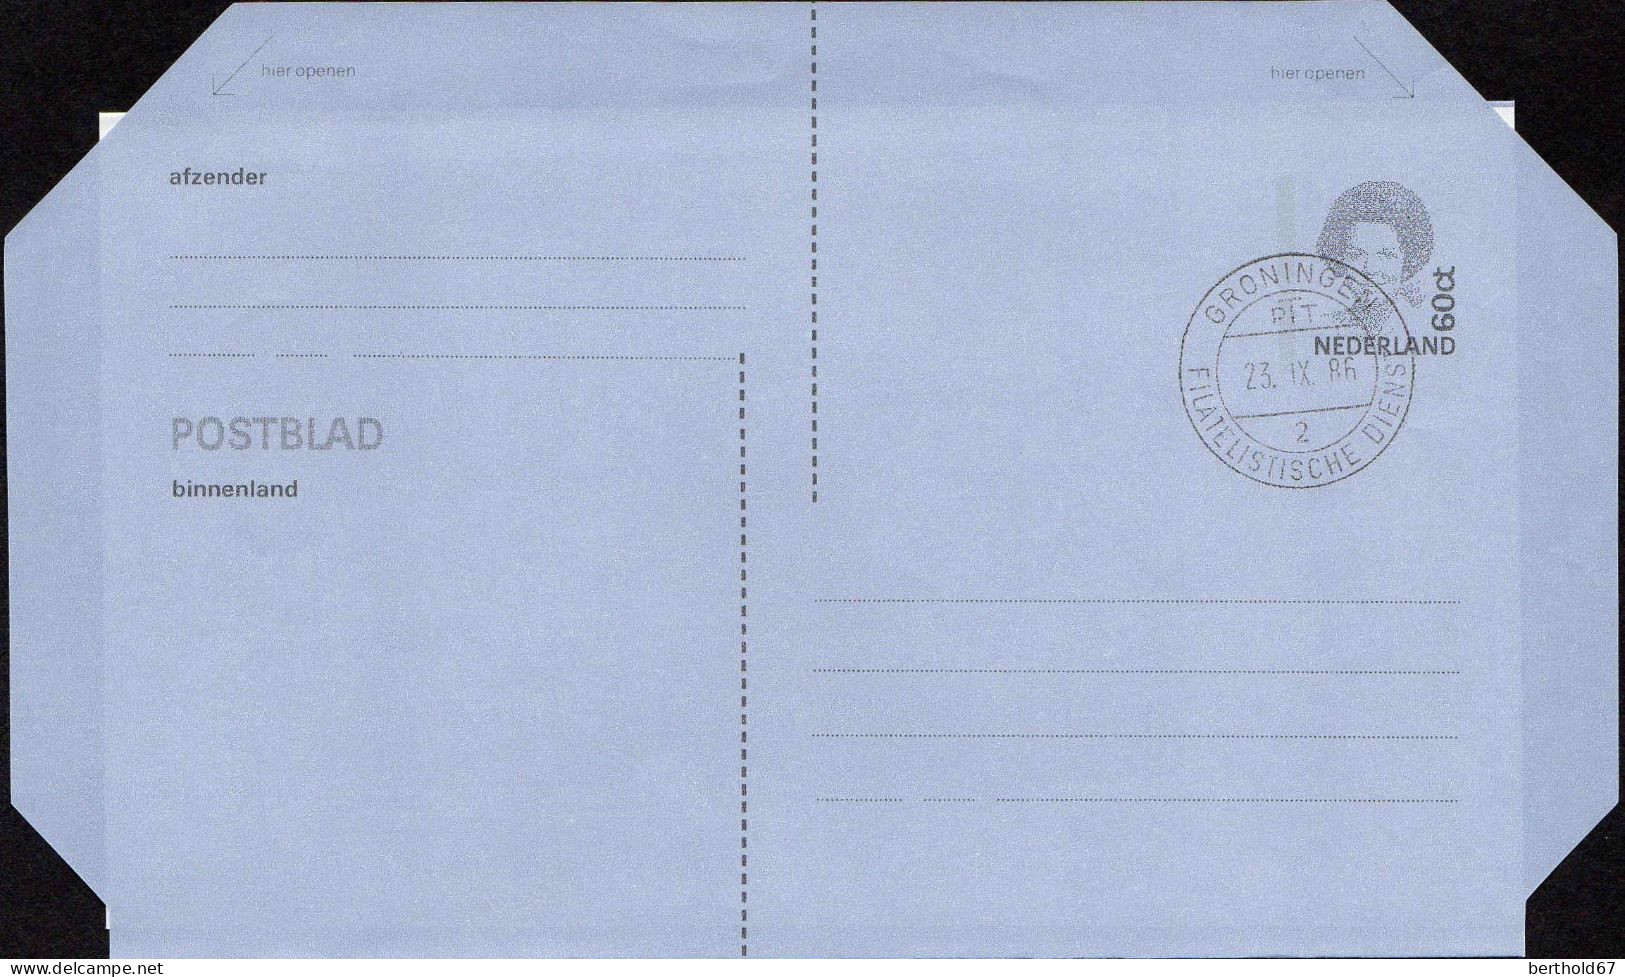 Pays-Bas Aérogr Obl (57) Postblad Binnenland 55ct Reine Beatrix (TB Cachet à Date) 60ct Bande Phosphore 28x2mm - Postal Stationery